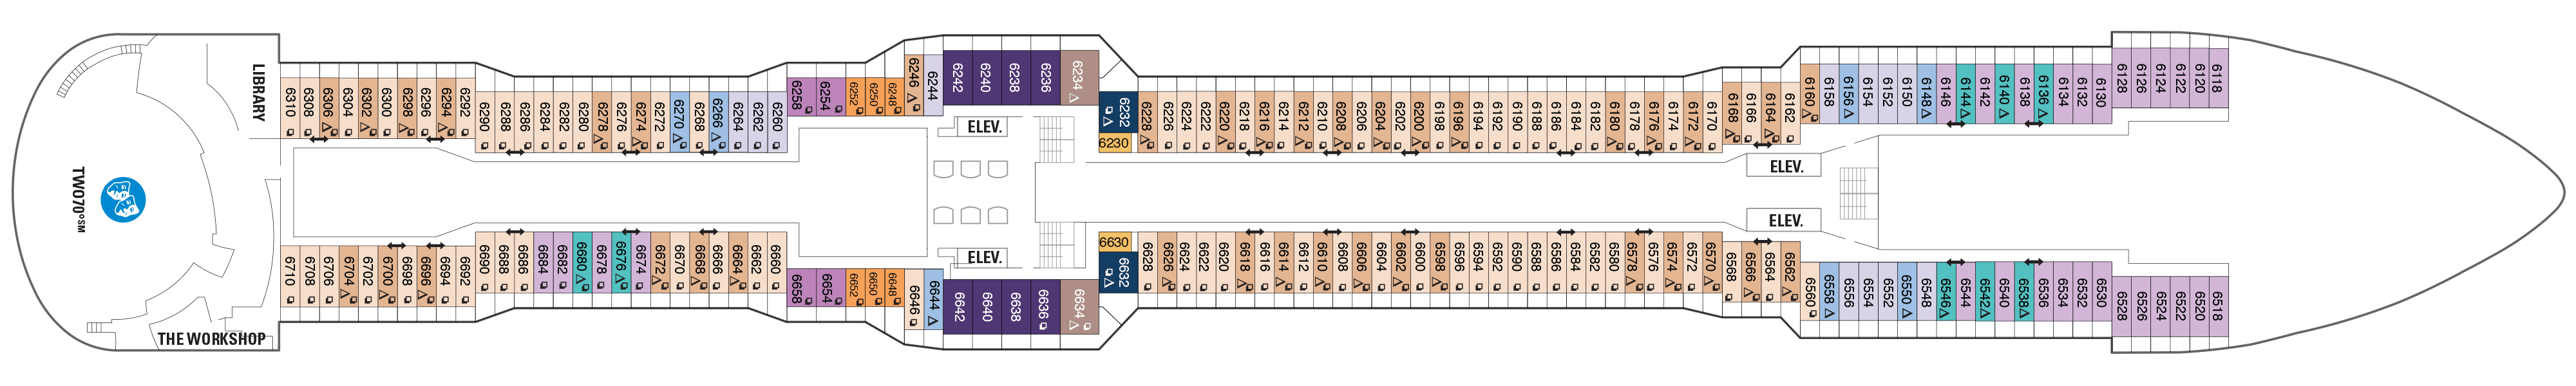 Ovation of the Seas - Royal Caribbean International - Deck 6